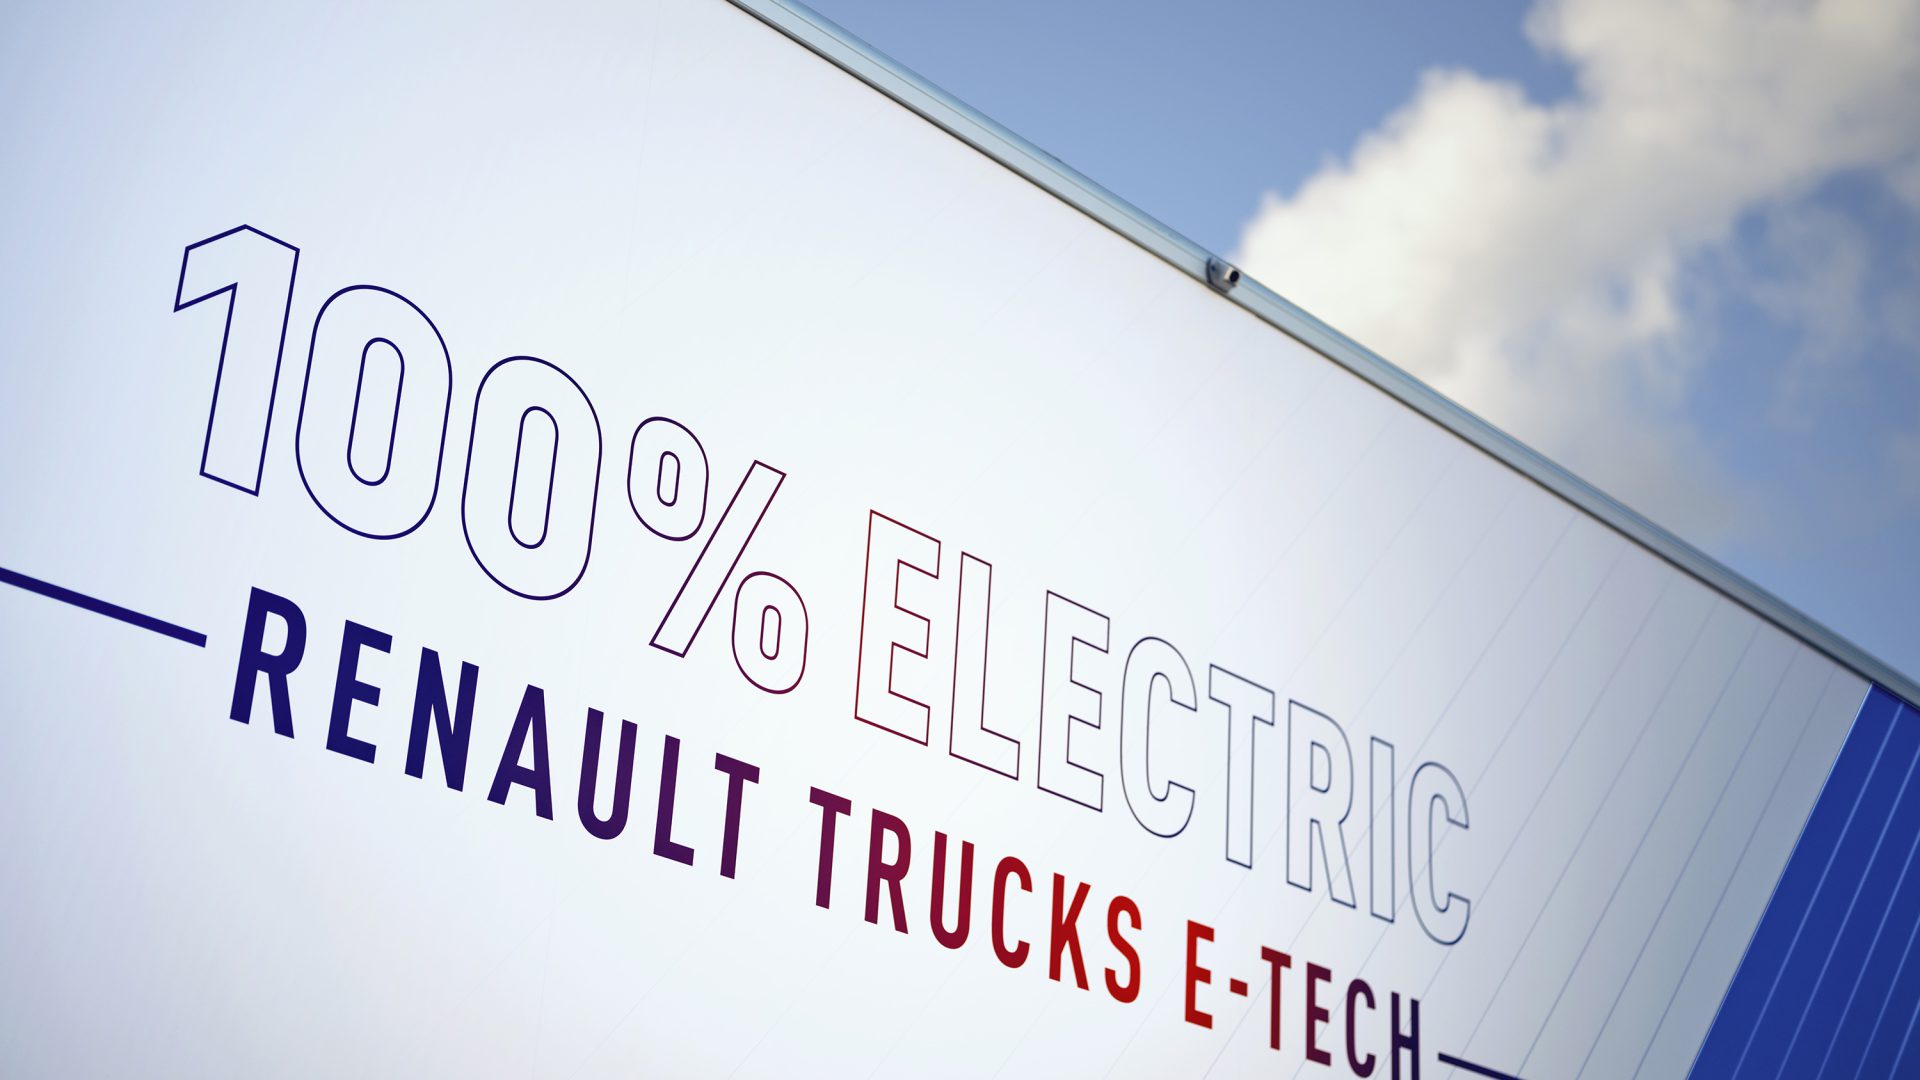 Renault Trucks electric